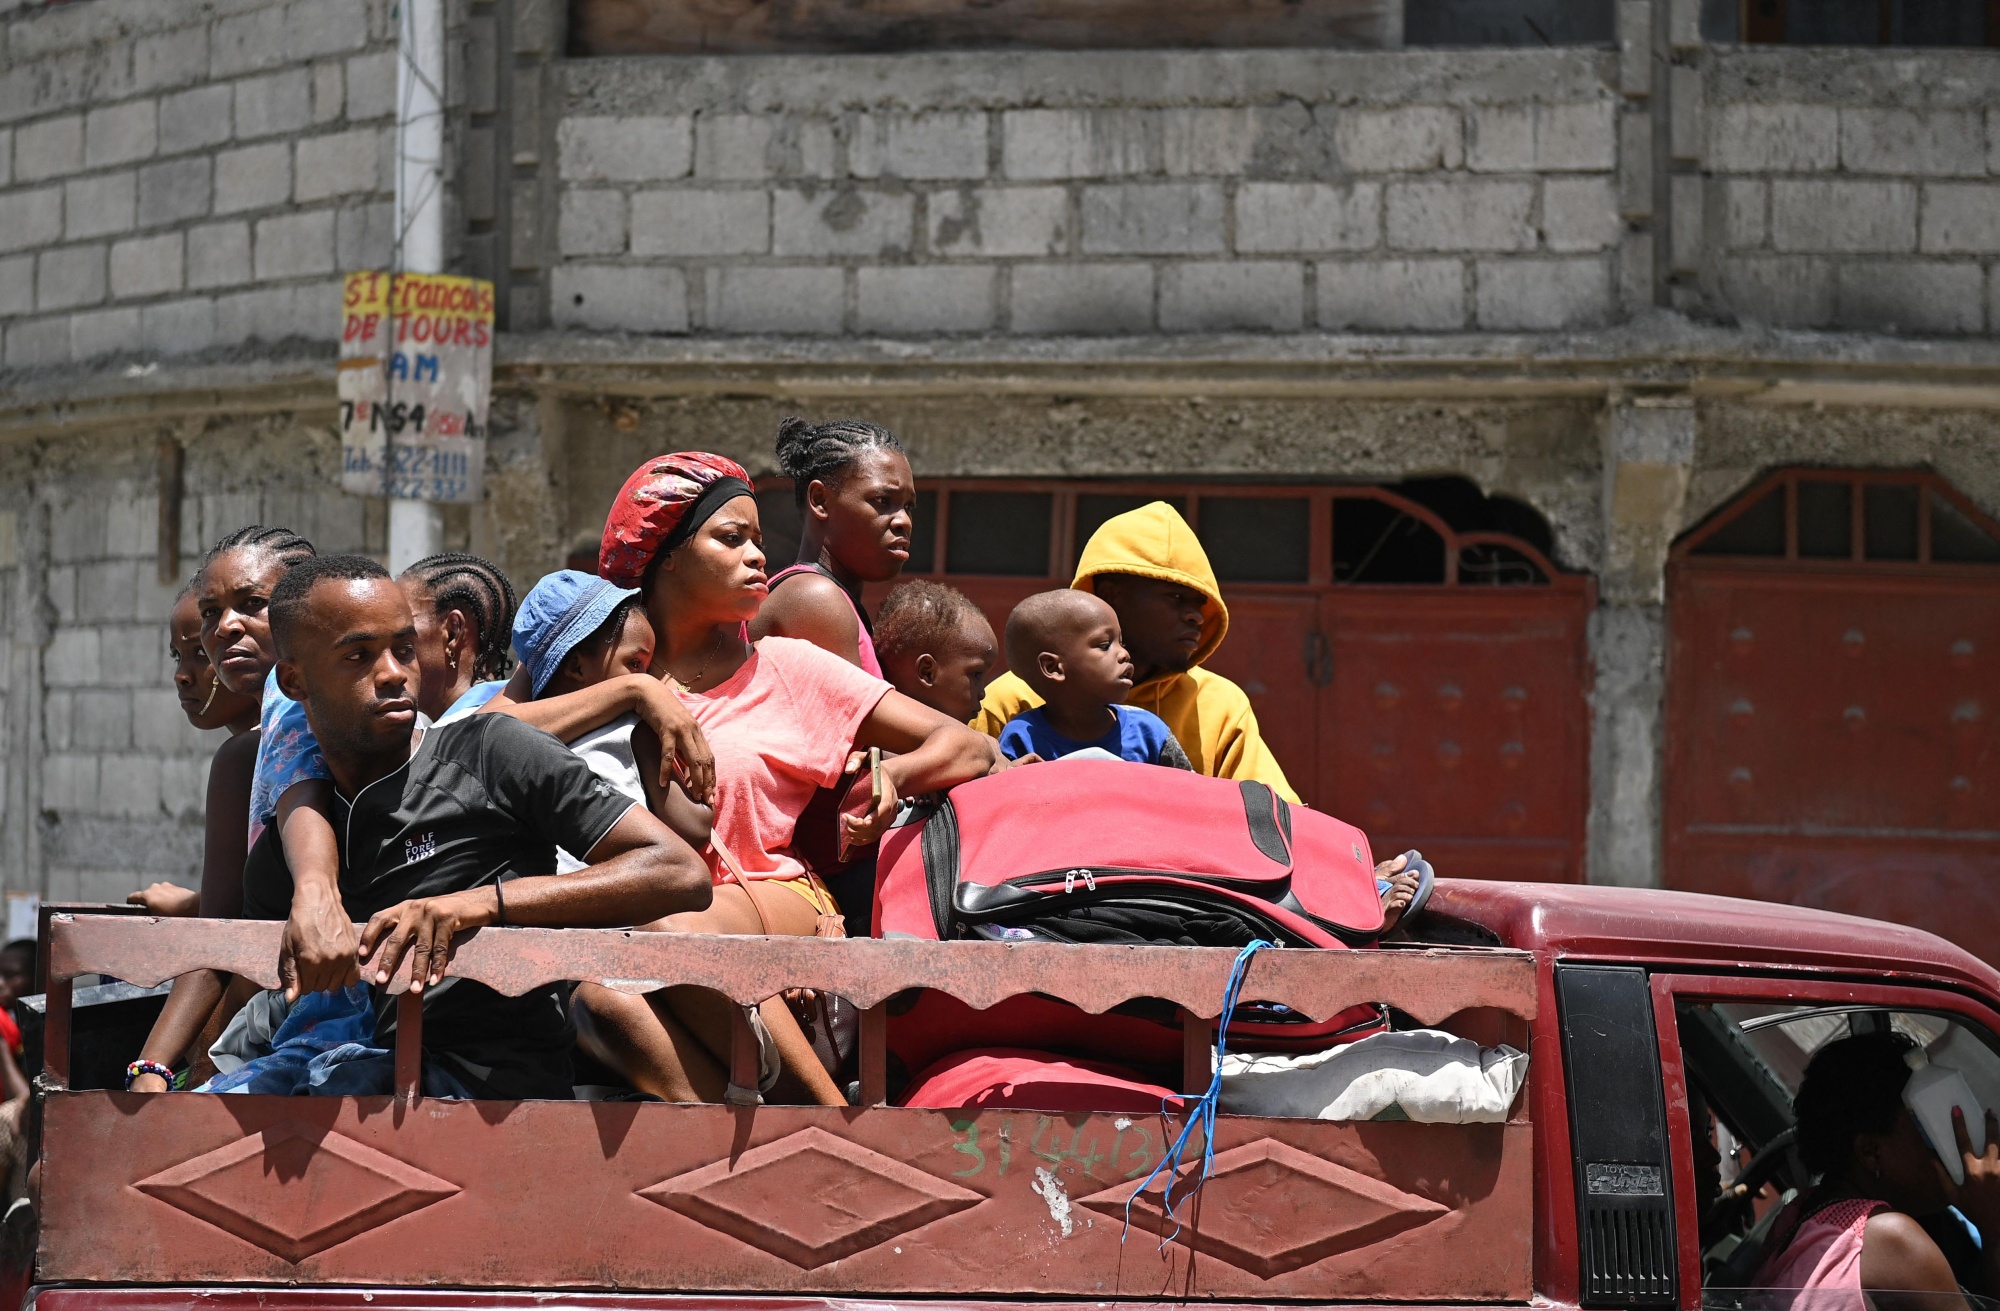 Kenyan president says Haiti mission to go ahead despite court ruling